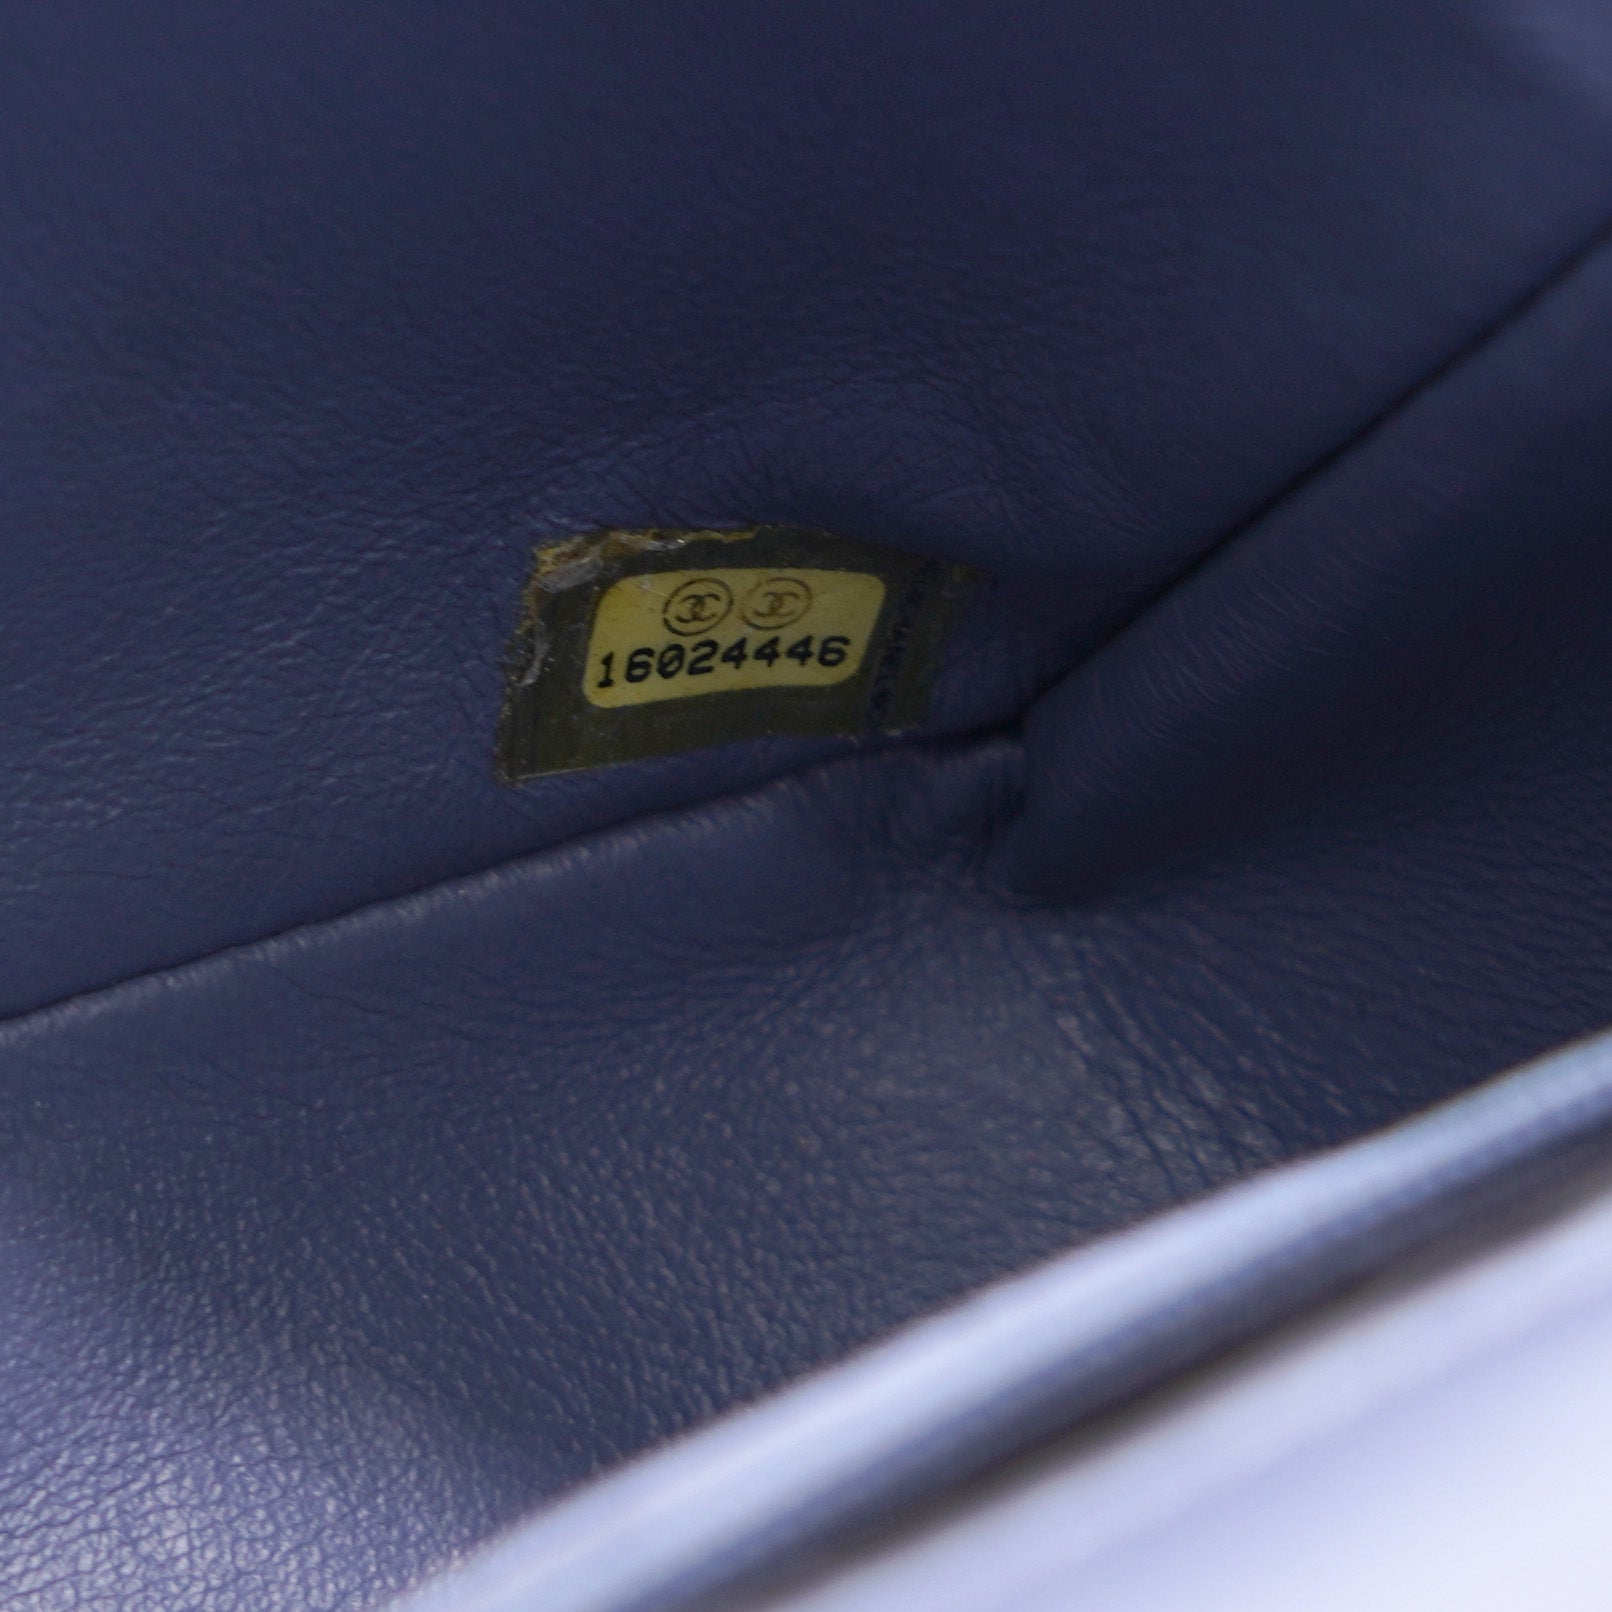 Grey Classic Patent Leather Rectangular Mini Flap Bag